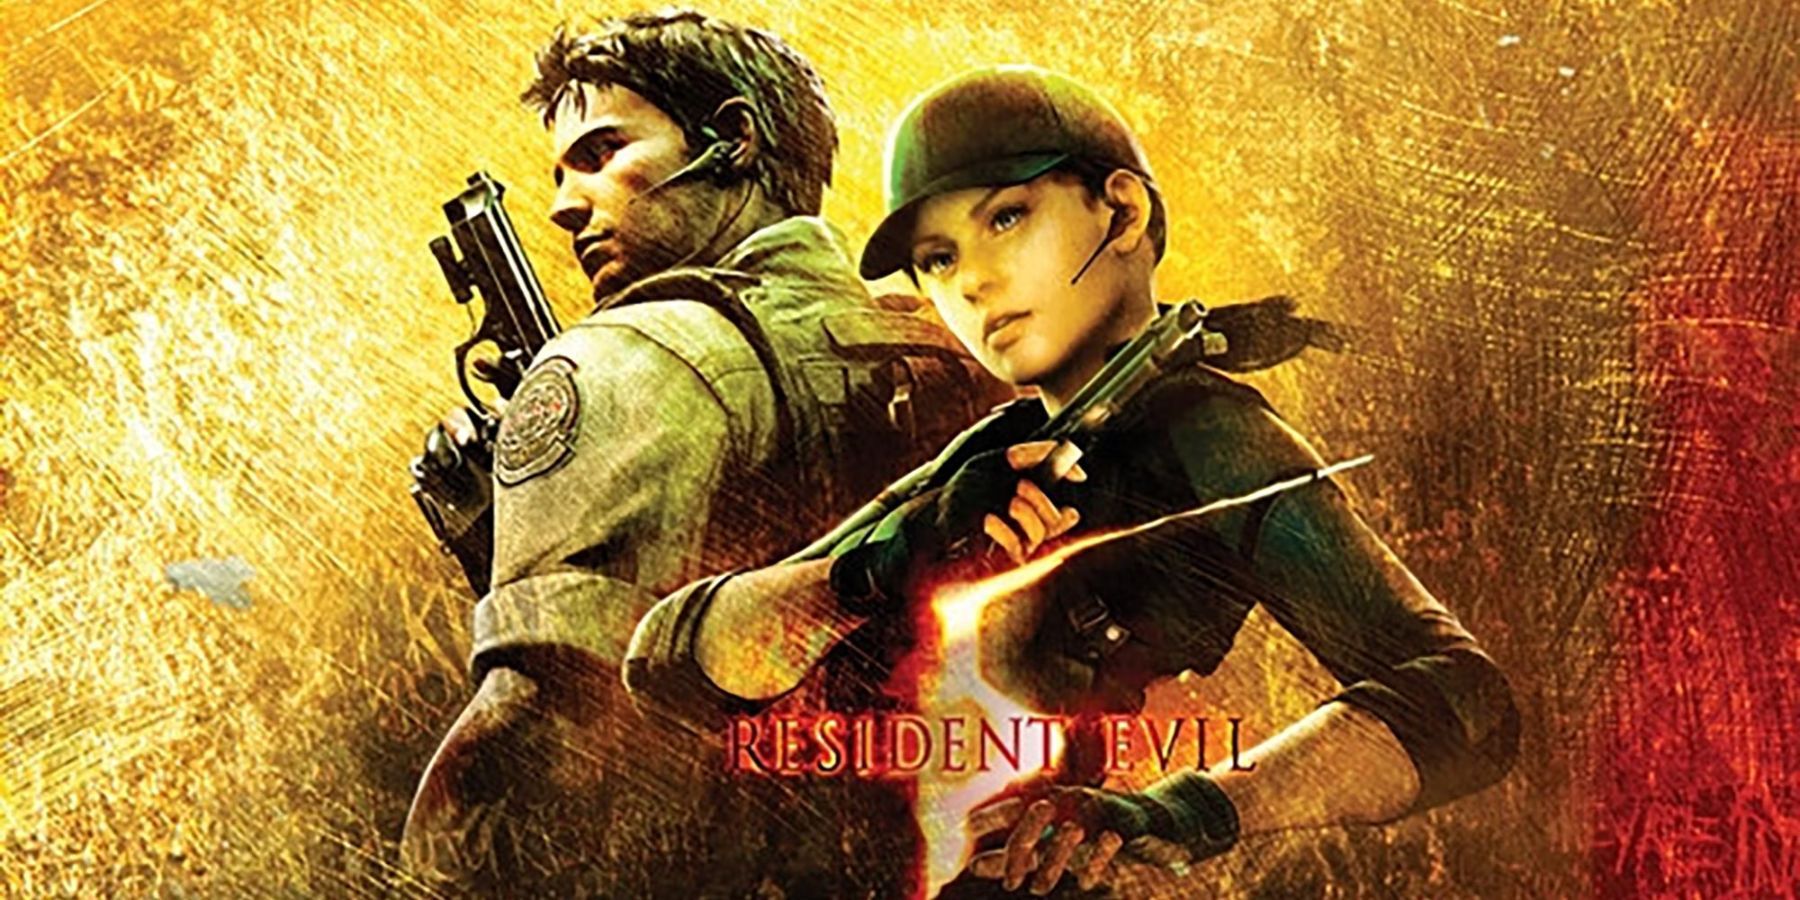 RESIDENT EVIL 5: REMAKE, Capcom's Next Remake